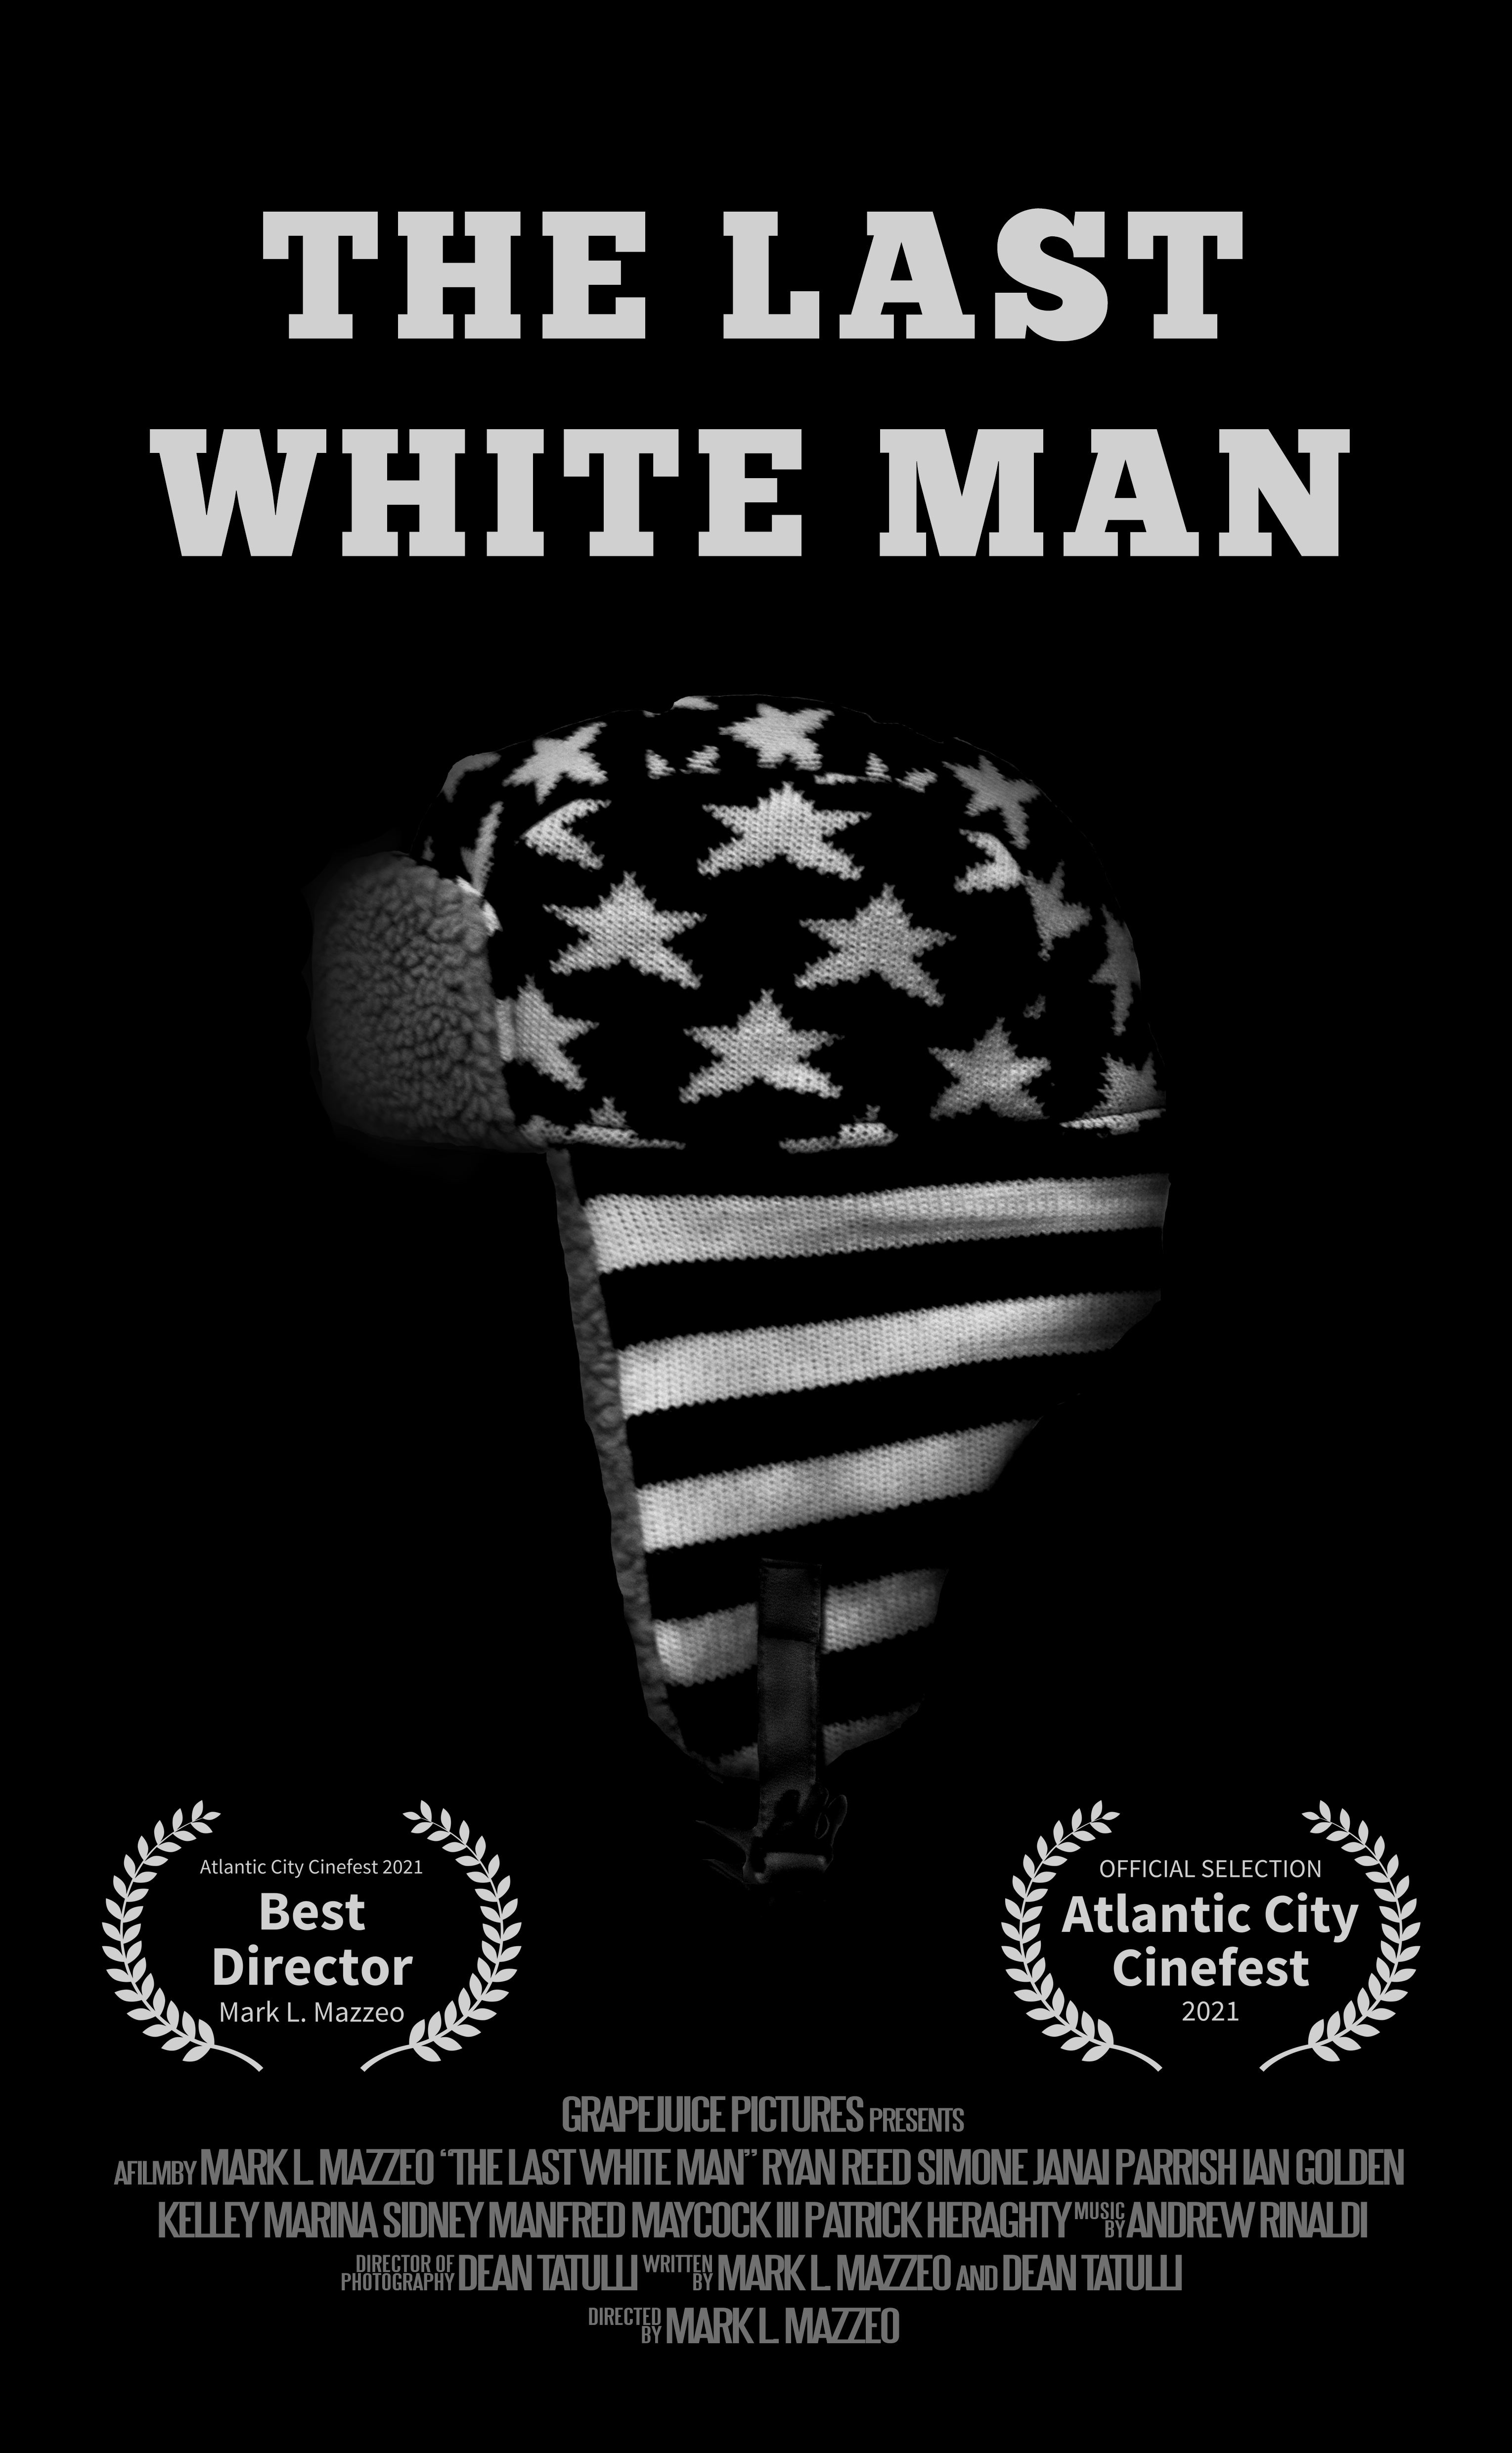 The Last White Man (2019)